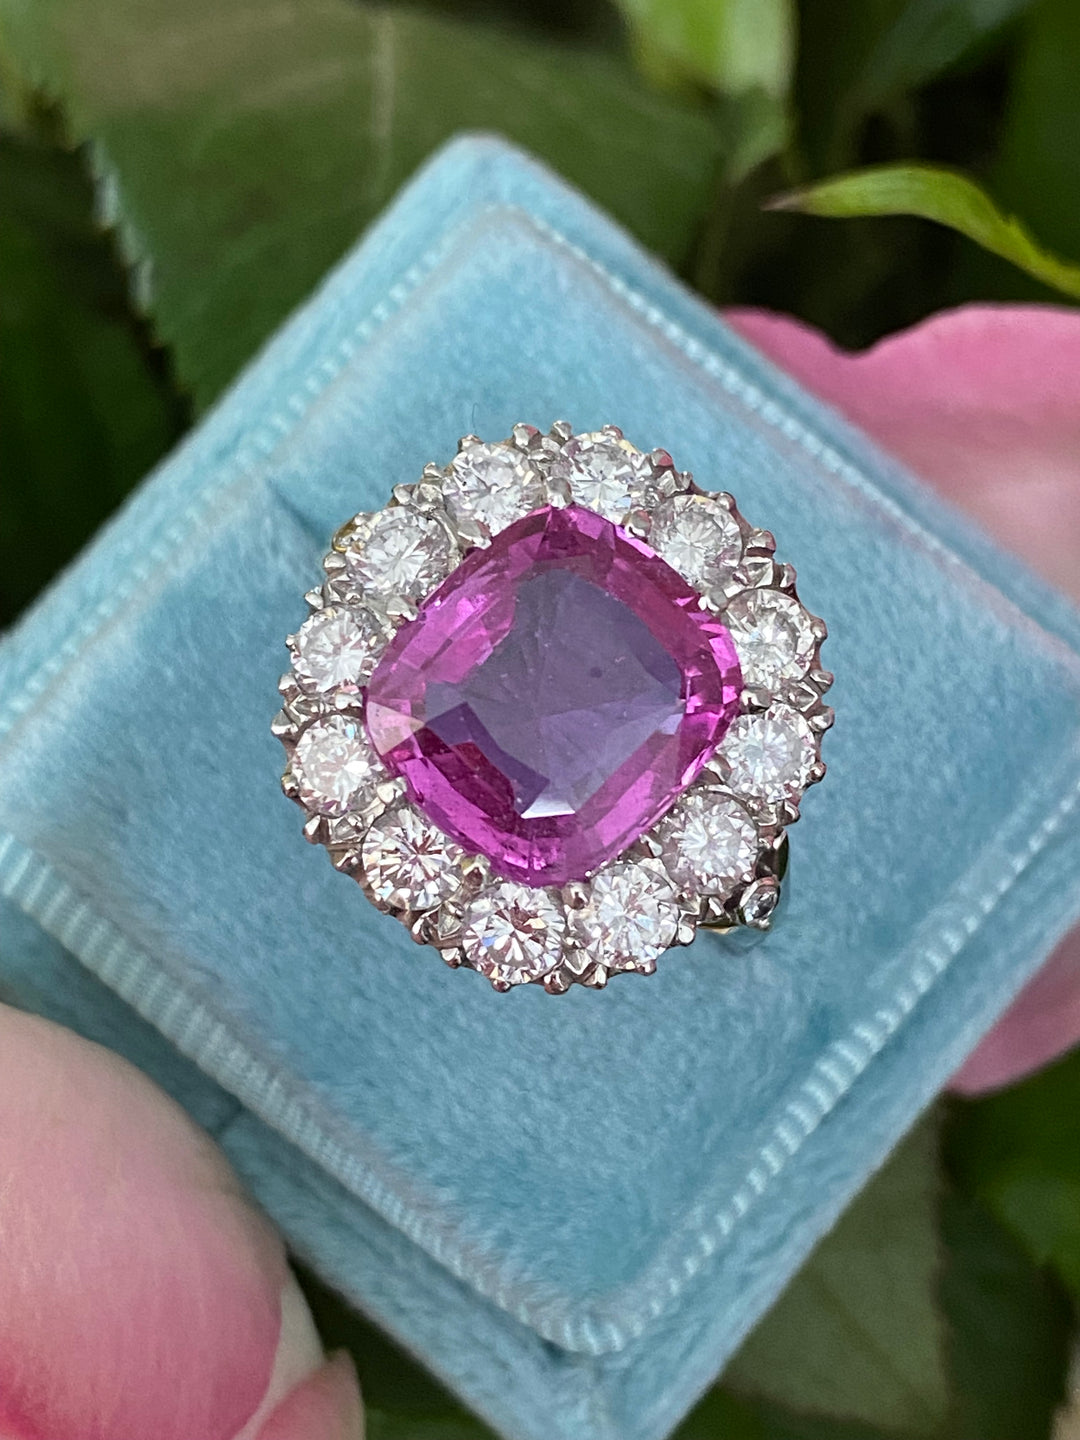 5.51 Carat Cushion Cut Pink Sapphire and 2.10ctw Diamond Halo Ring in Platinum